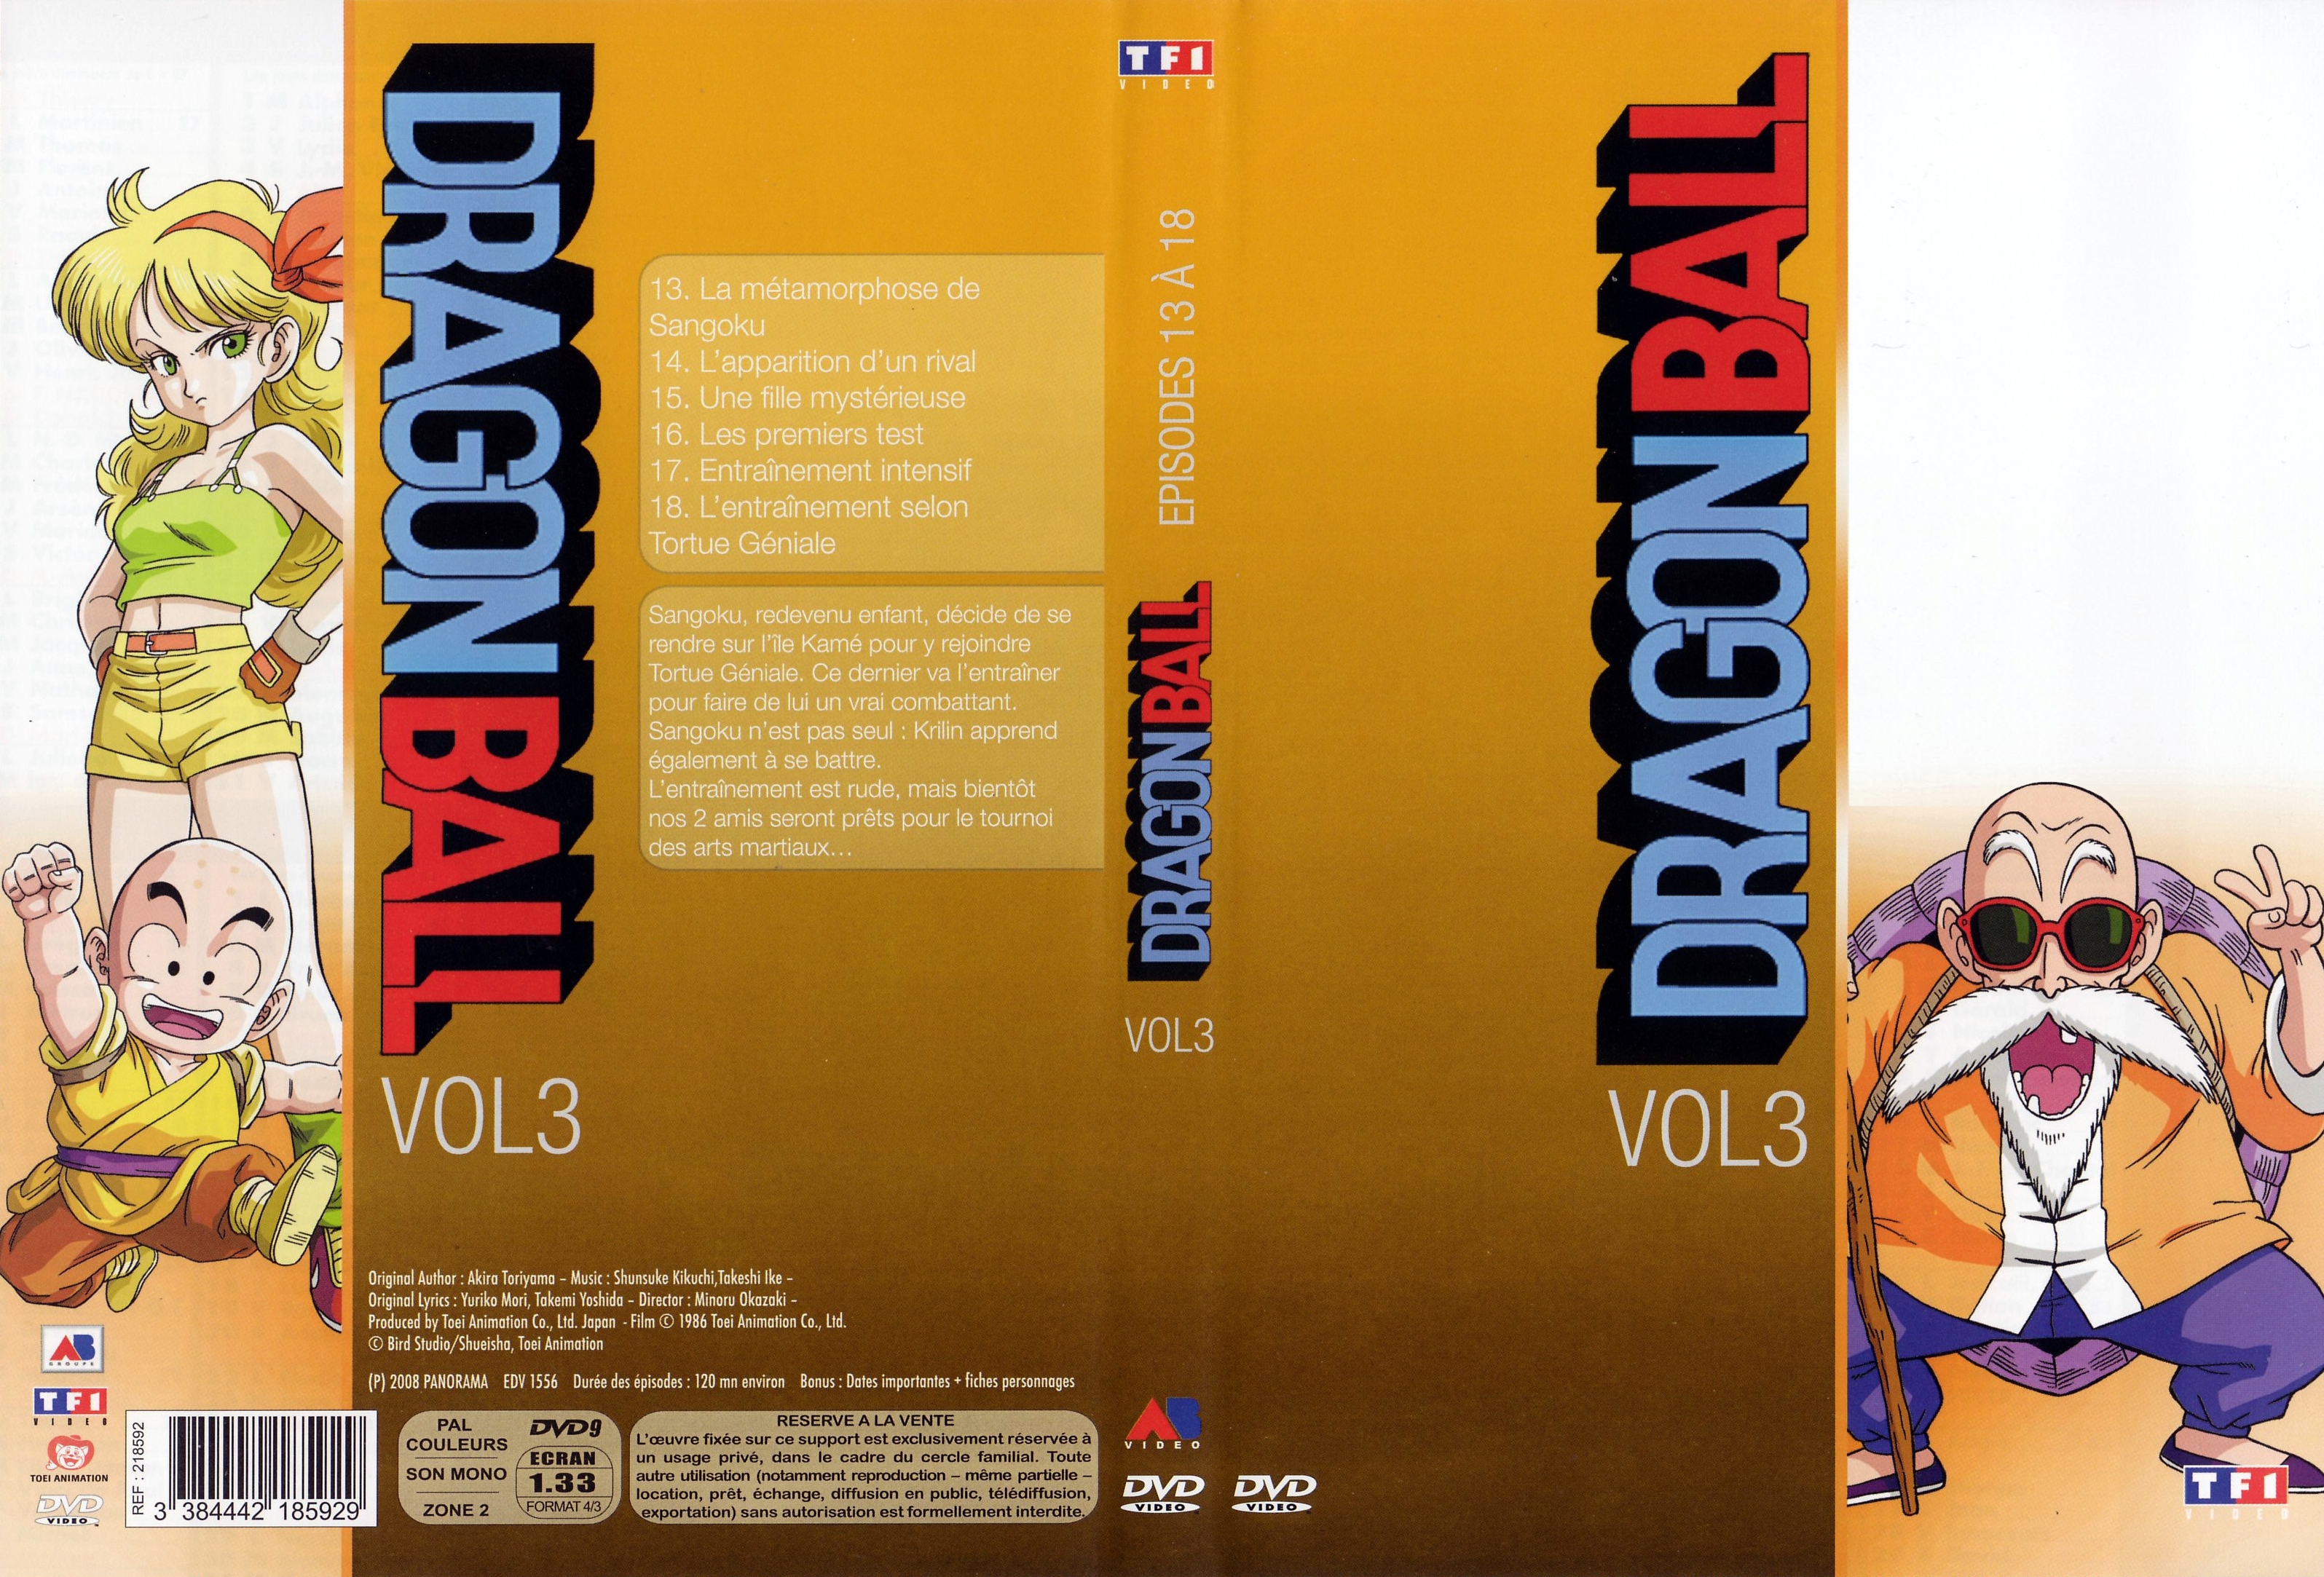 Jaquette DVD Dragon ball vol 03 v2